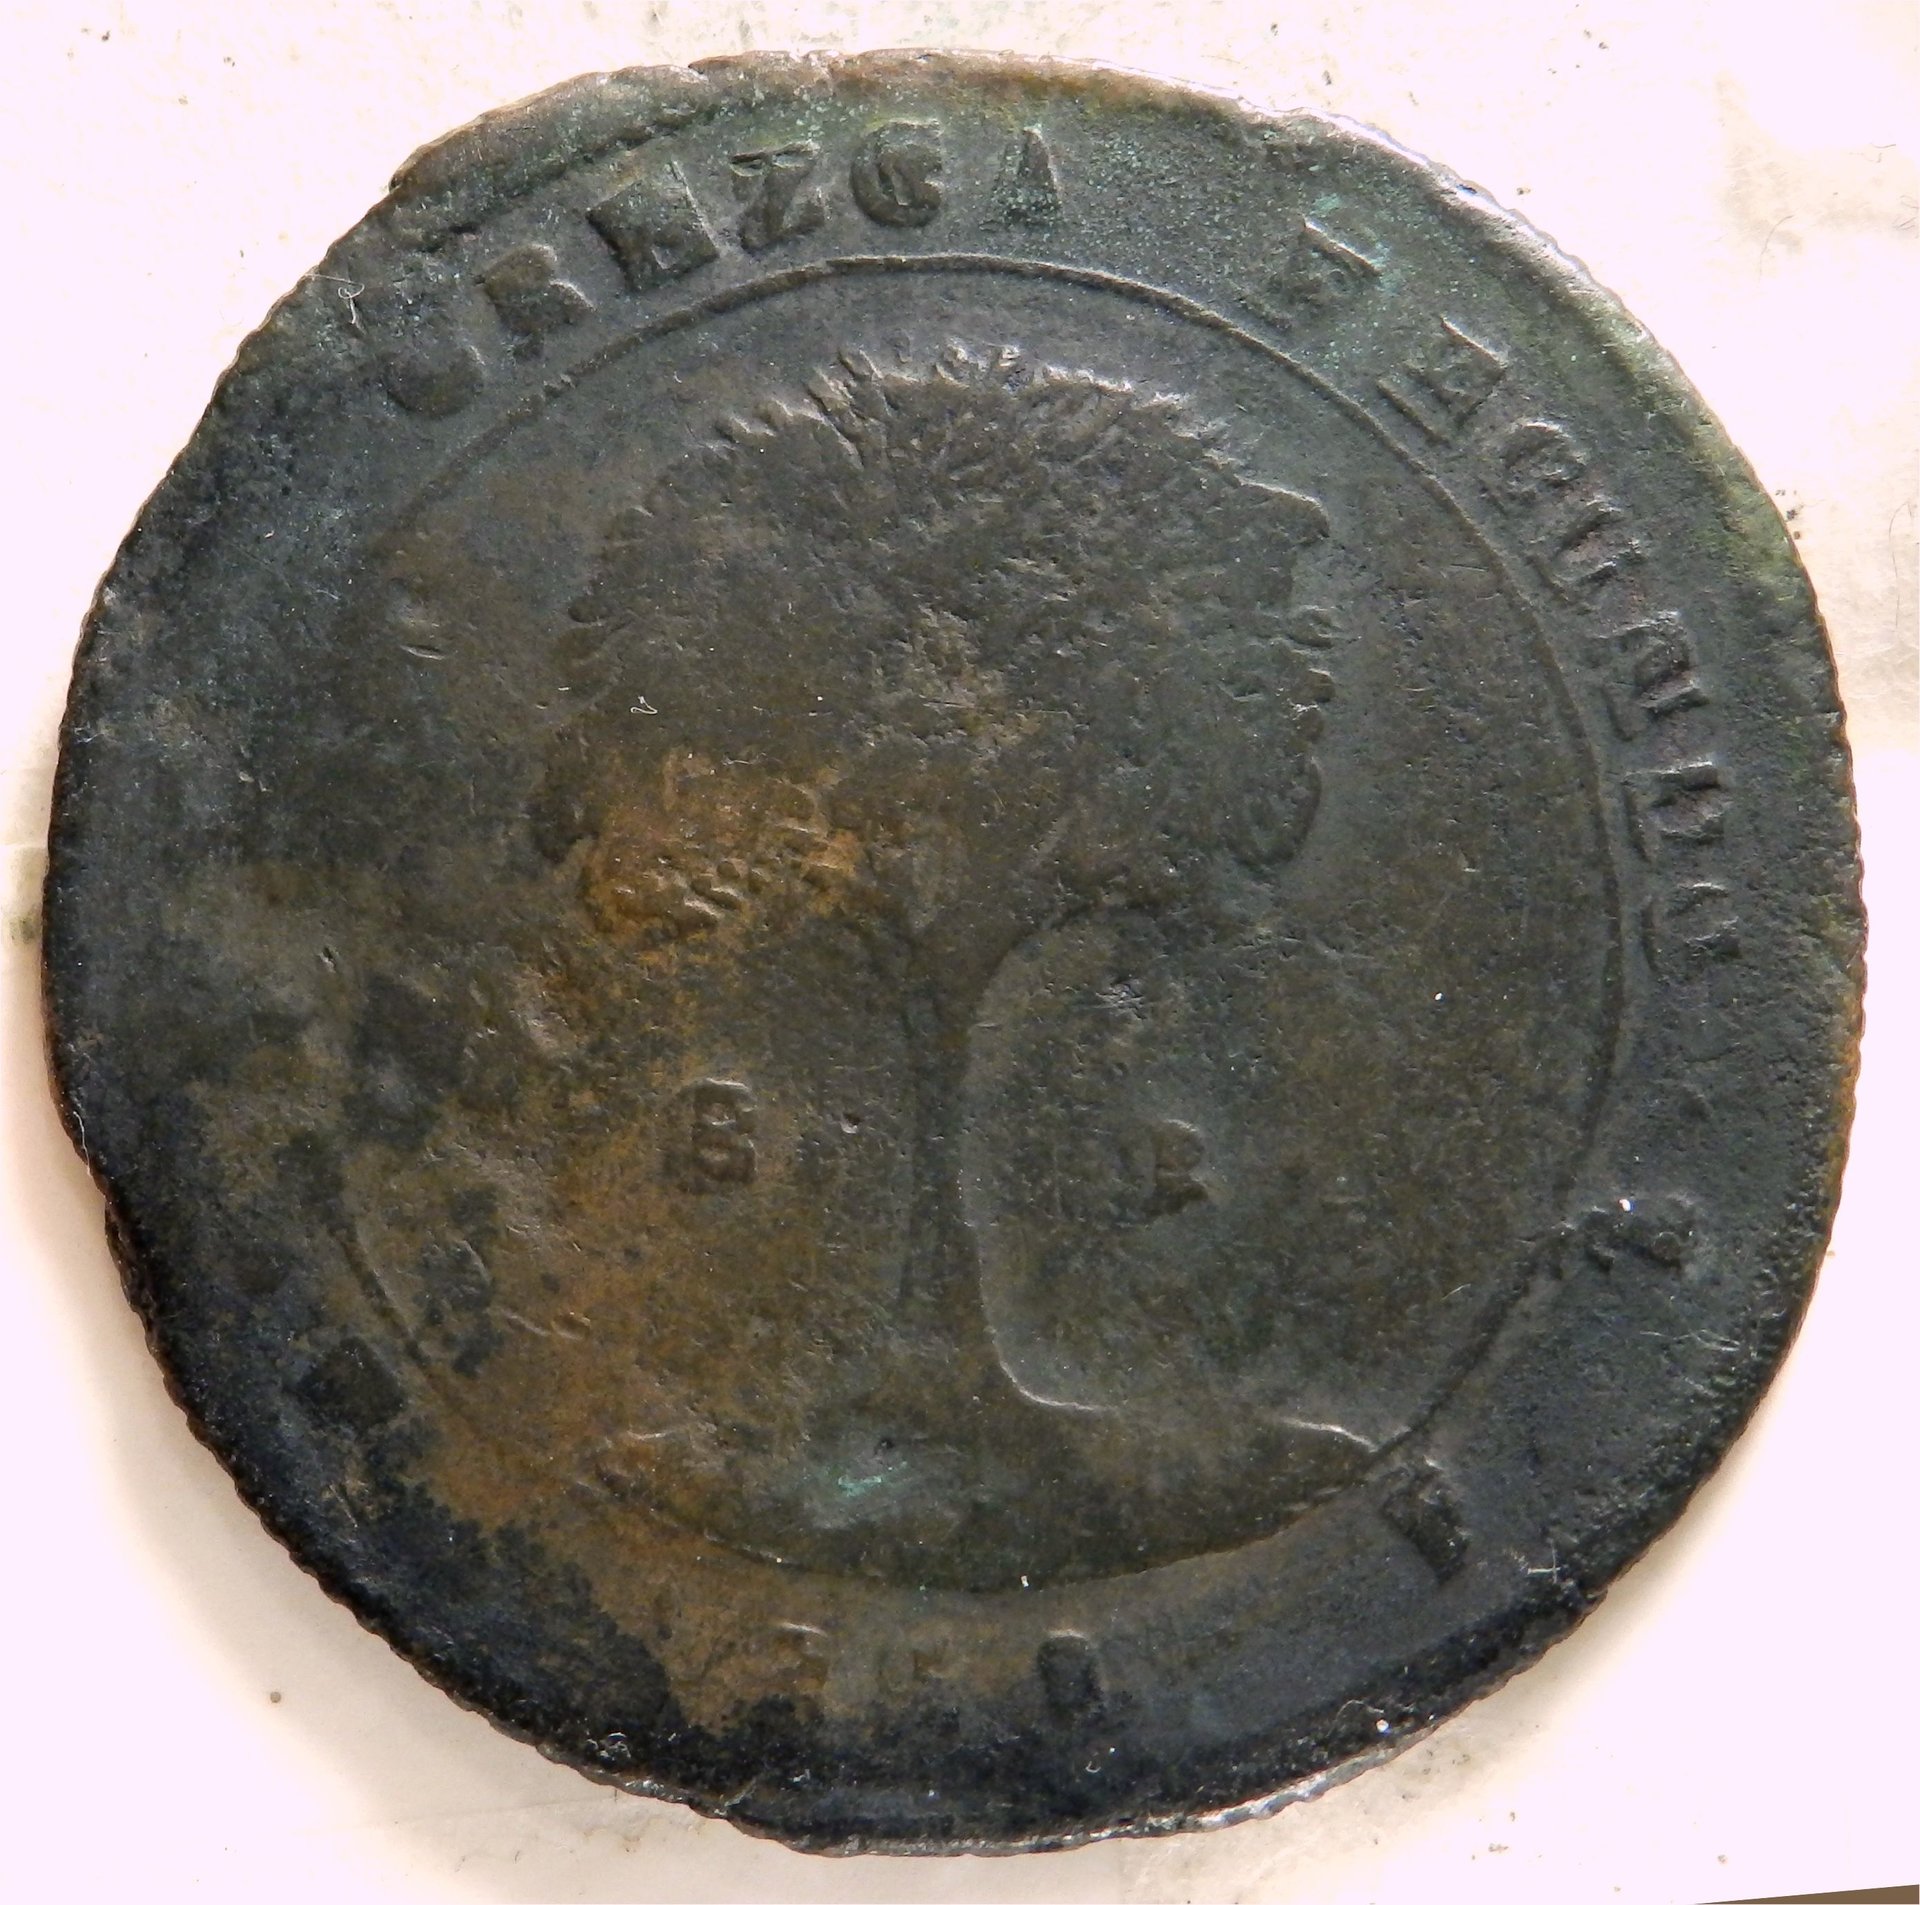 1858 Honduras 8 reales rev.jpg